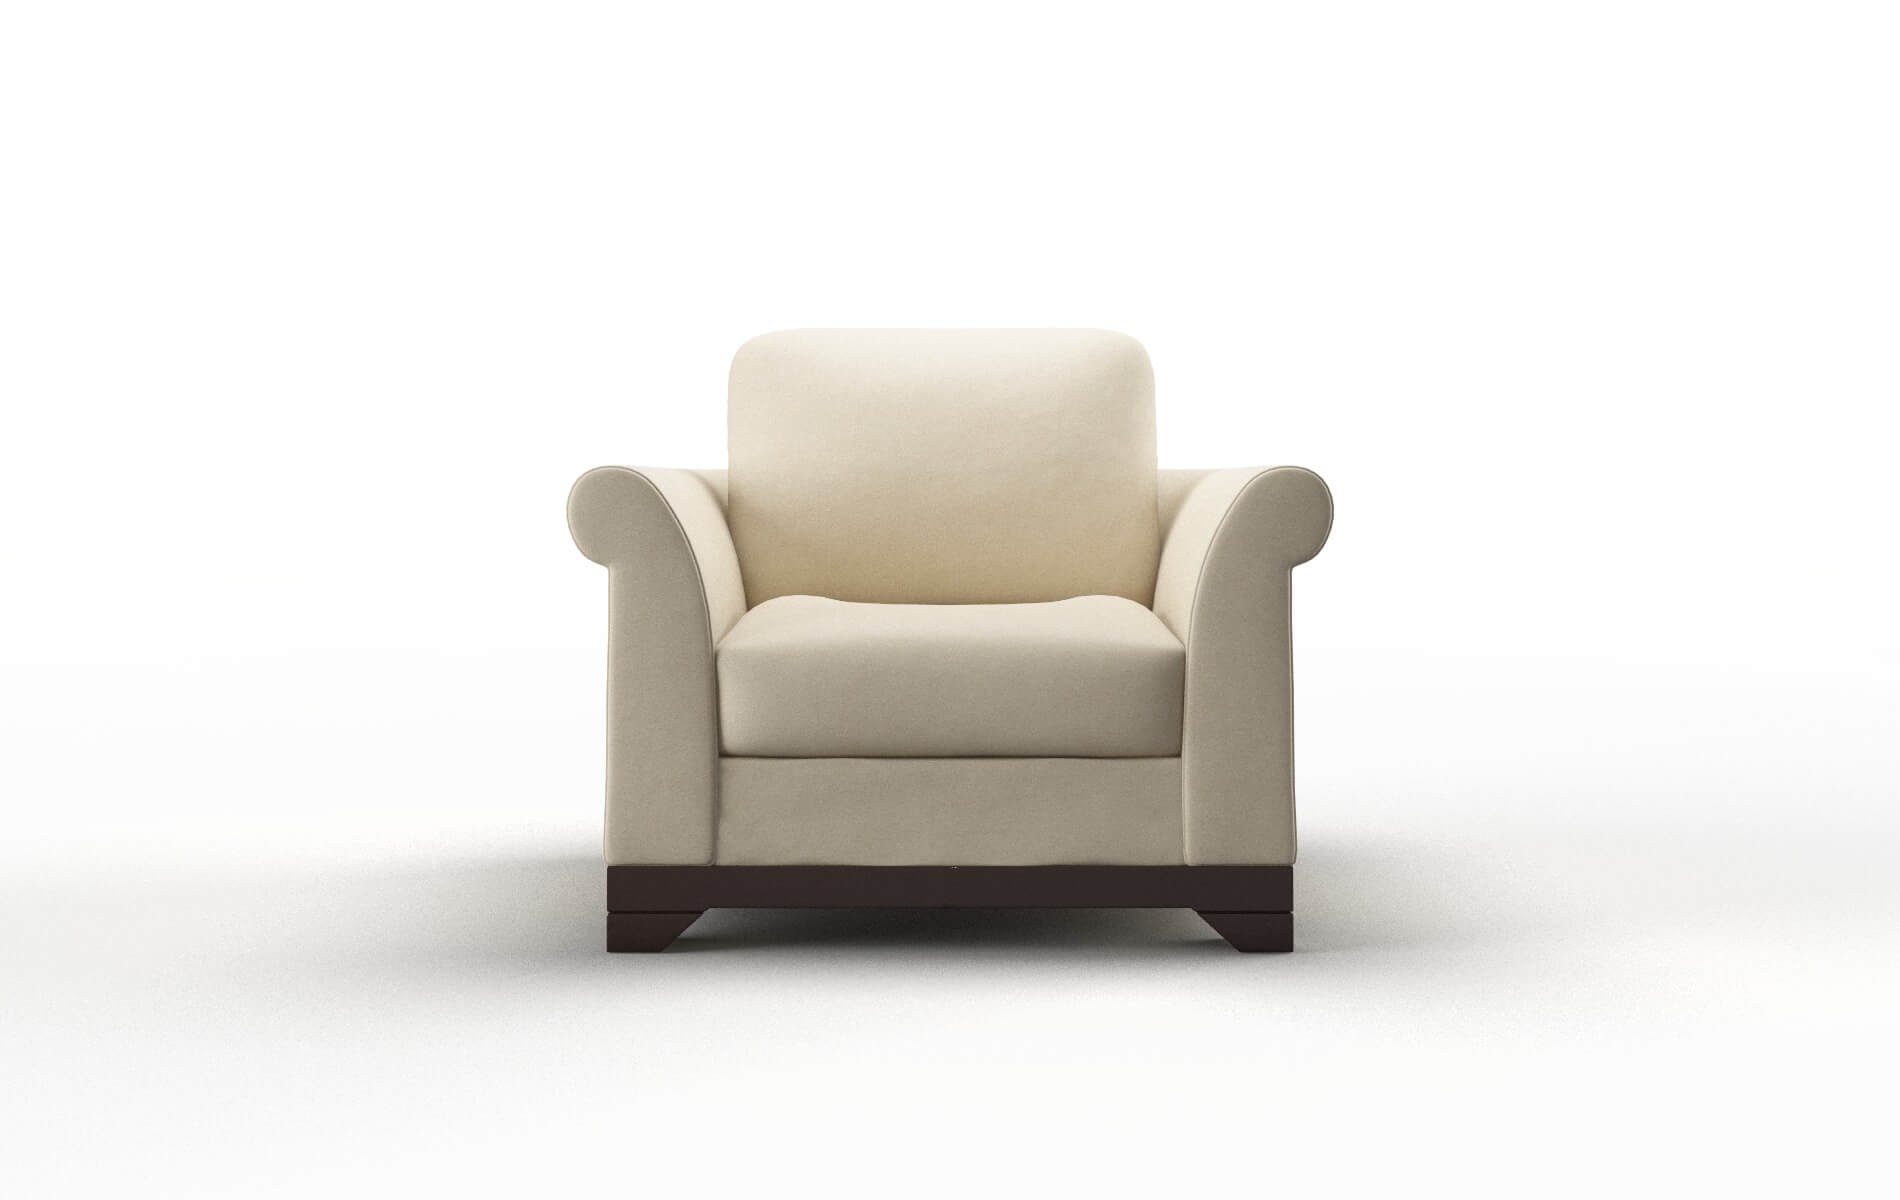 Denver Dream_d Almond Chair espresso legs 1